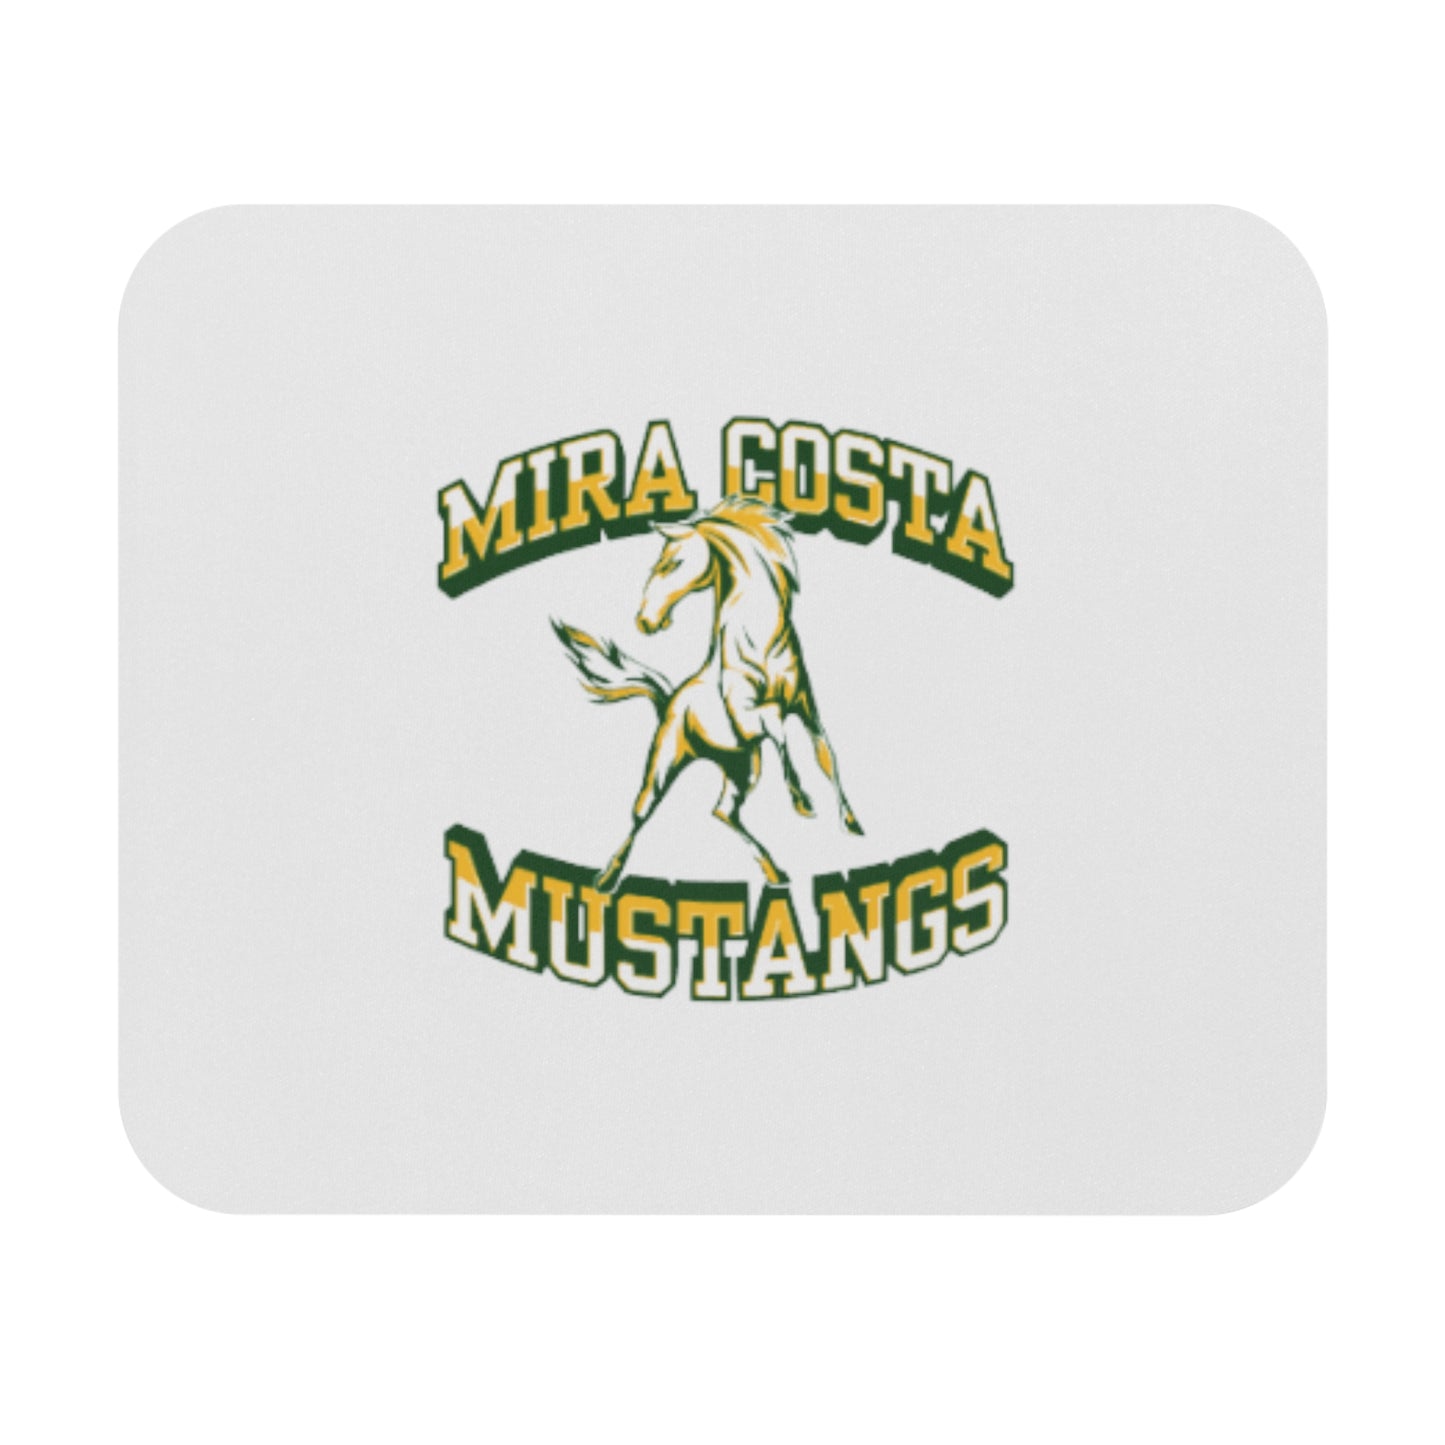 Mira Costa High School Manhattan Beach California - Mouse Pad Rectangle